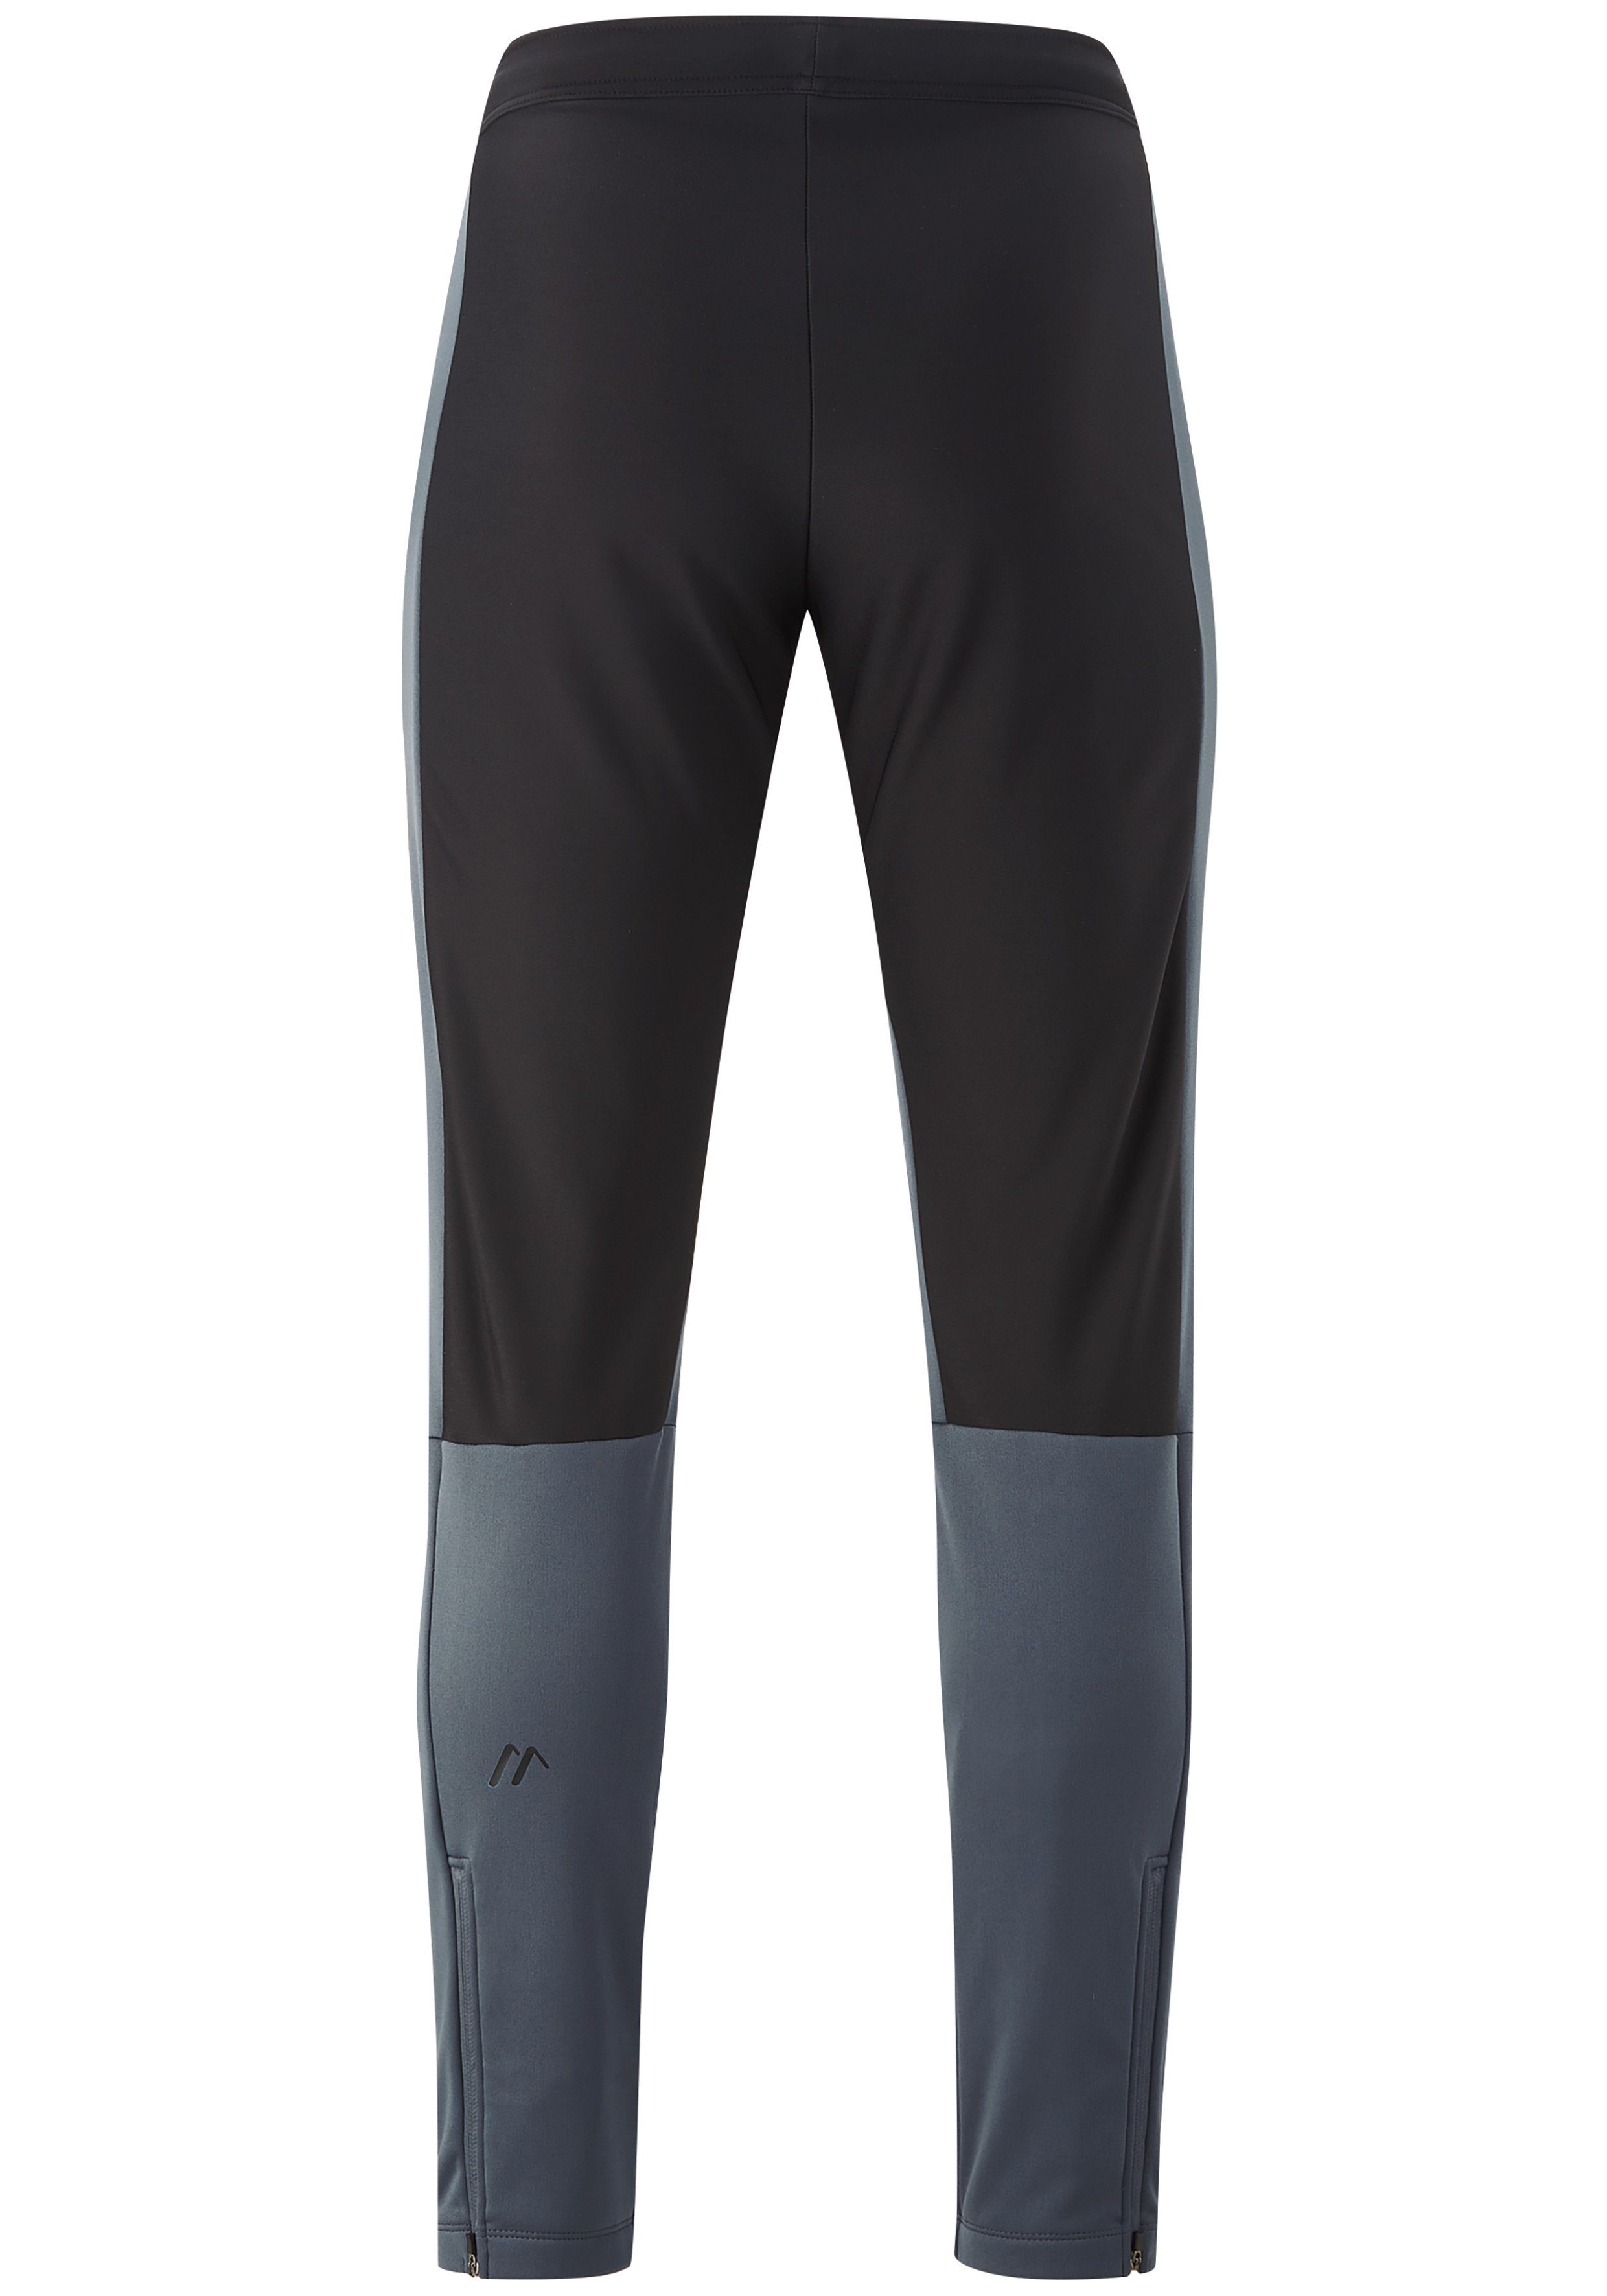 Maier Sports Softshellhose Malselv modernen graublau in Schnitt Softshell-Hose Pants Slim-Fit M komfortable